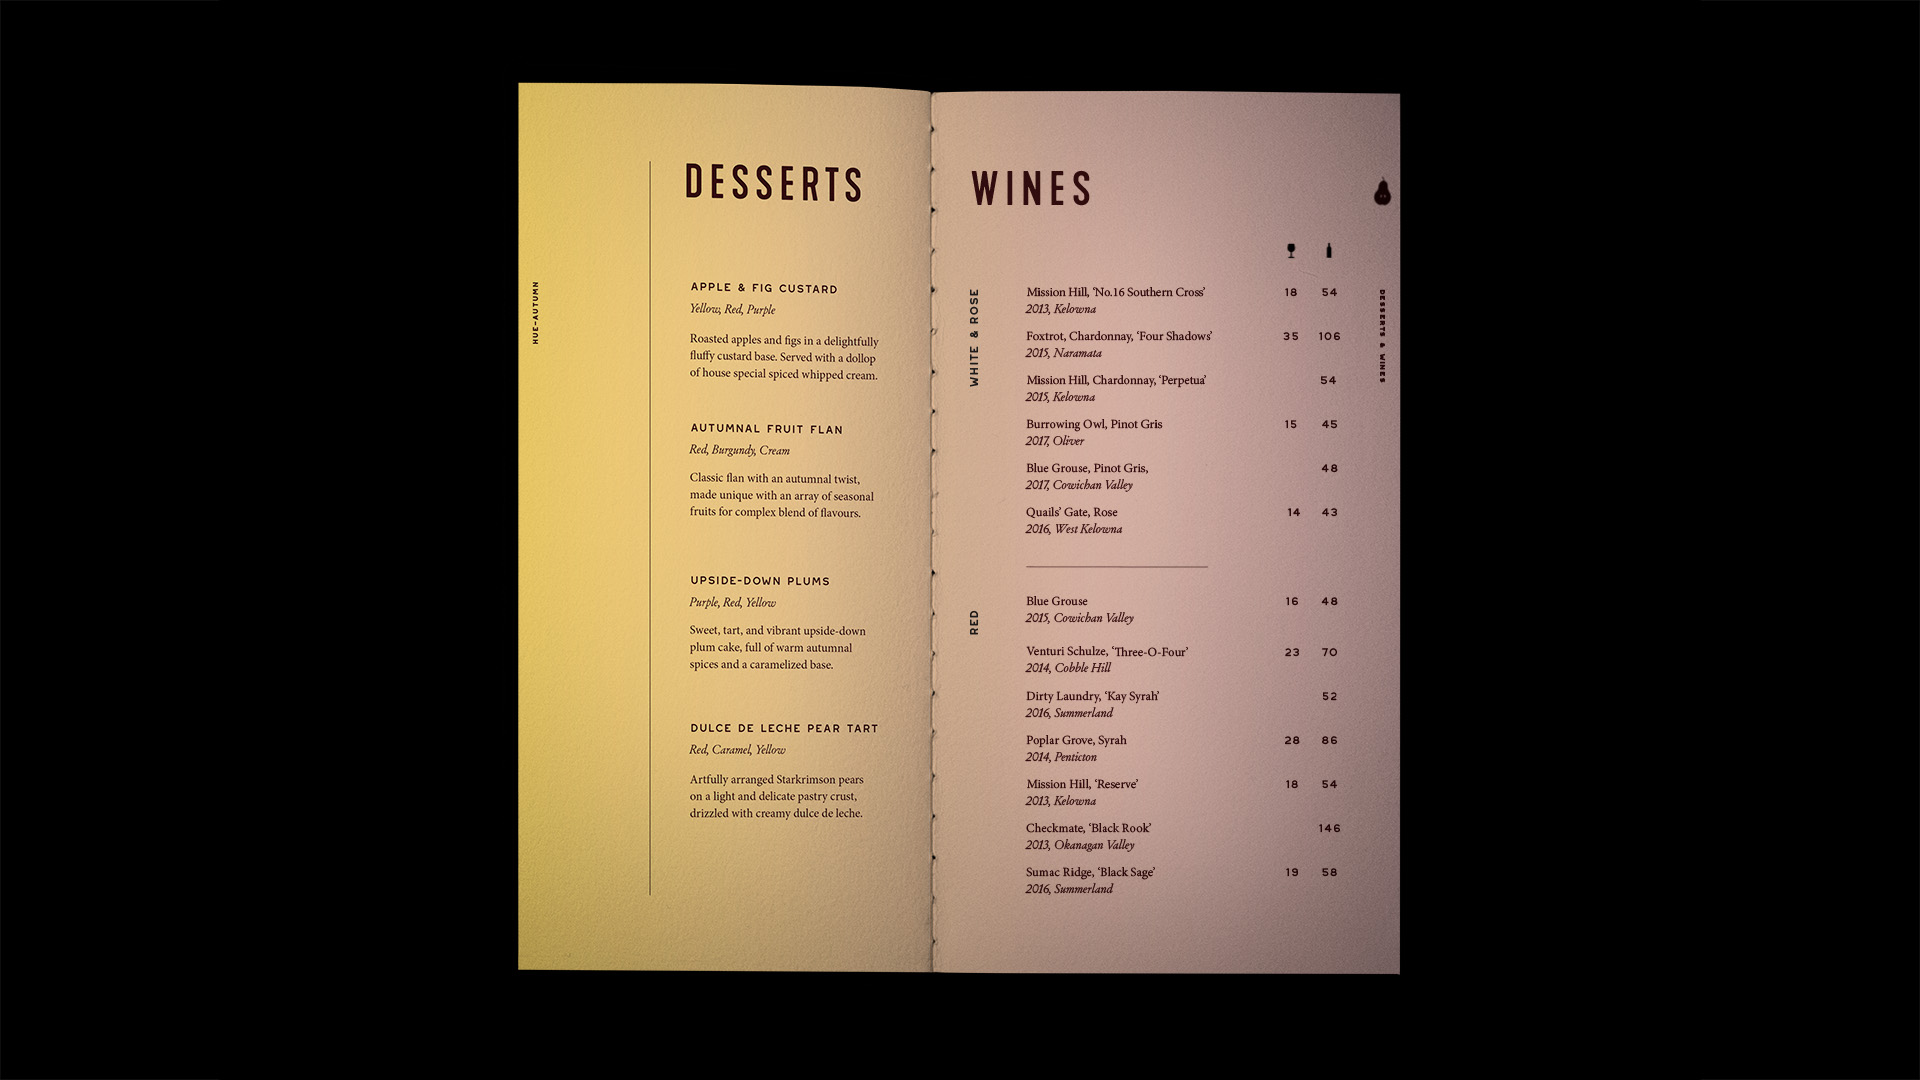 Hue menu drinks and desserts spread mockup.